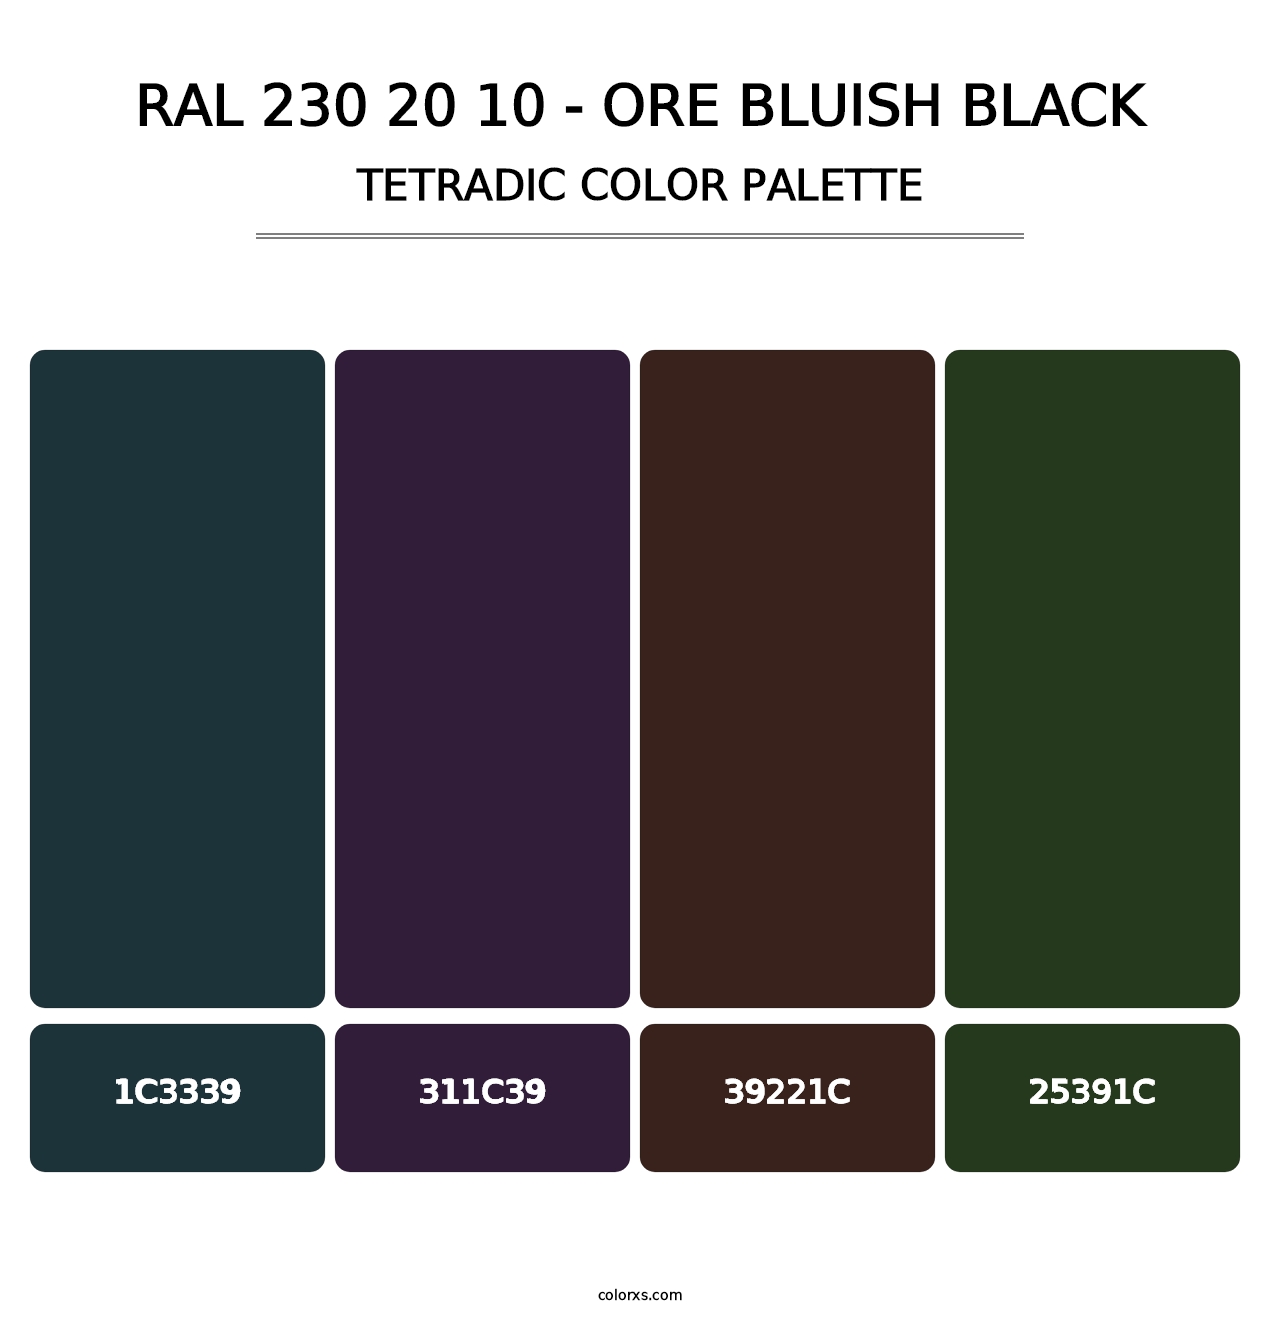 RAL 230 20 10 - Ore Bluish Black - Tetradic Color Palette